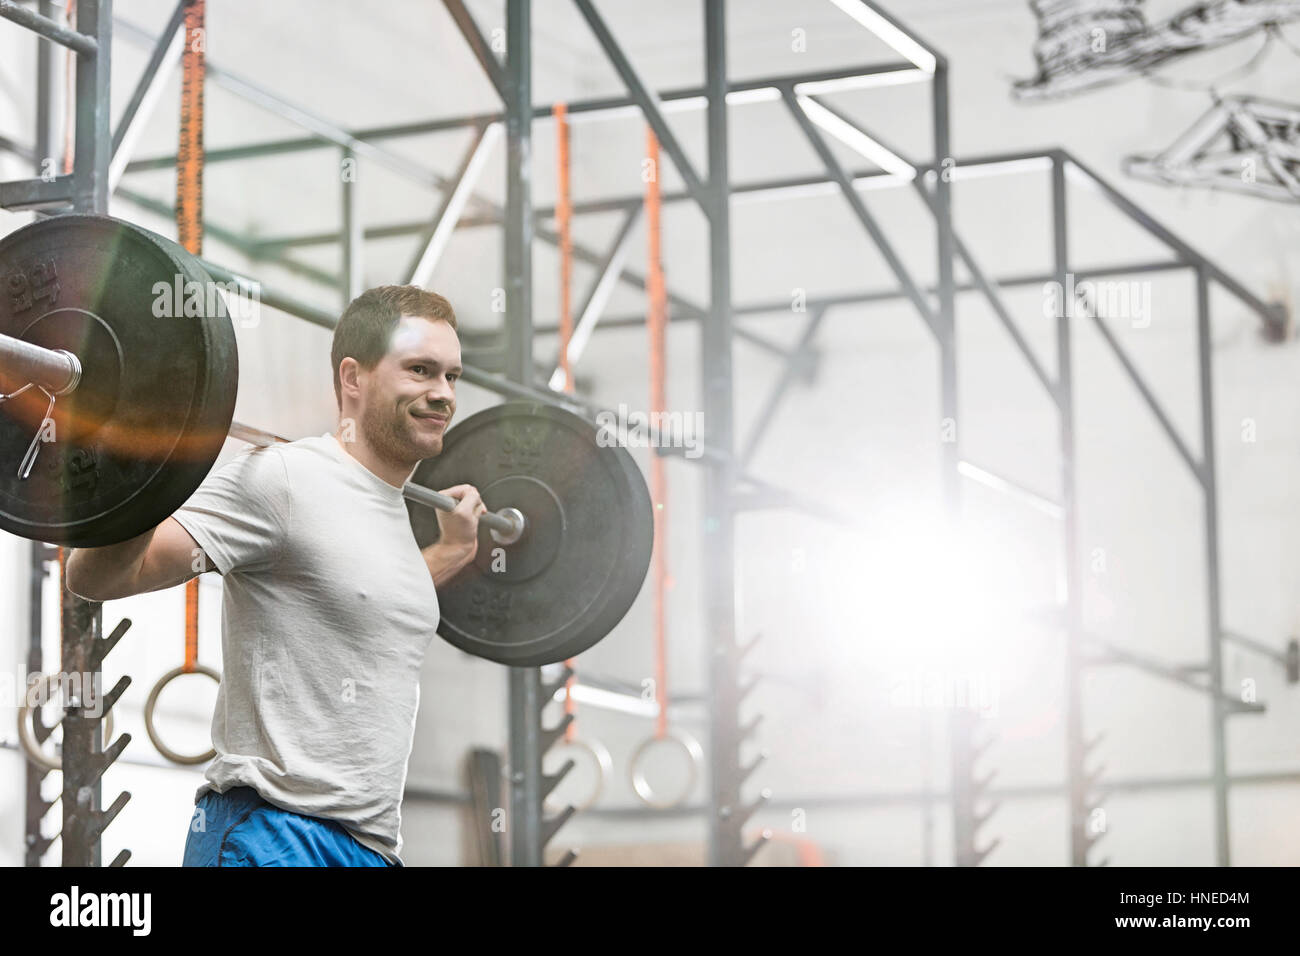 Smiling man lifting barbell at crossfit gym Stock Photo